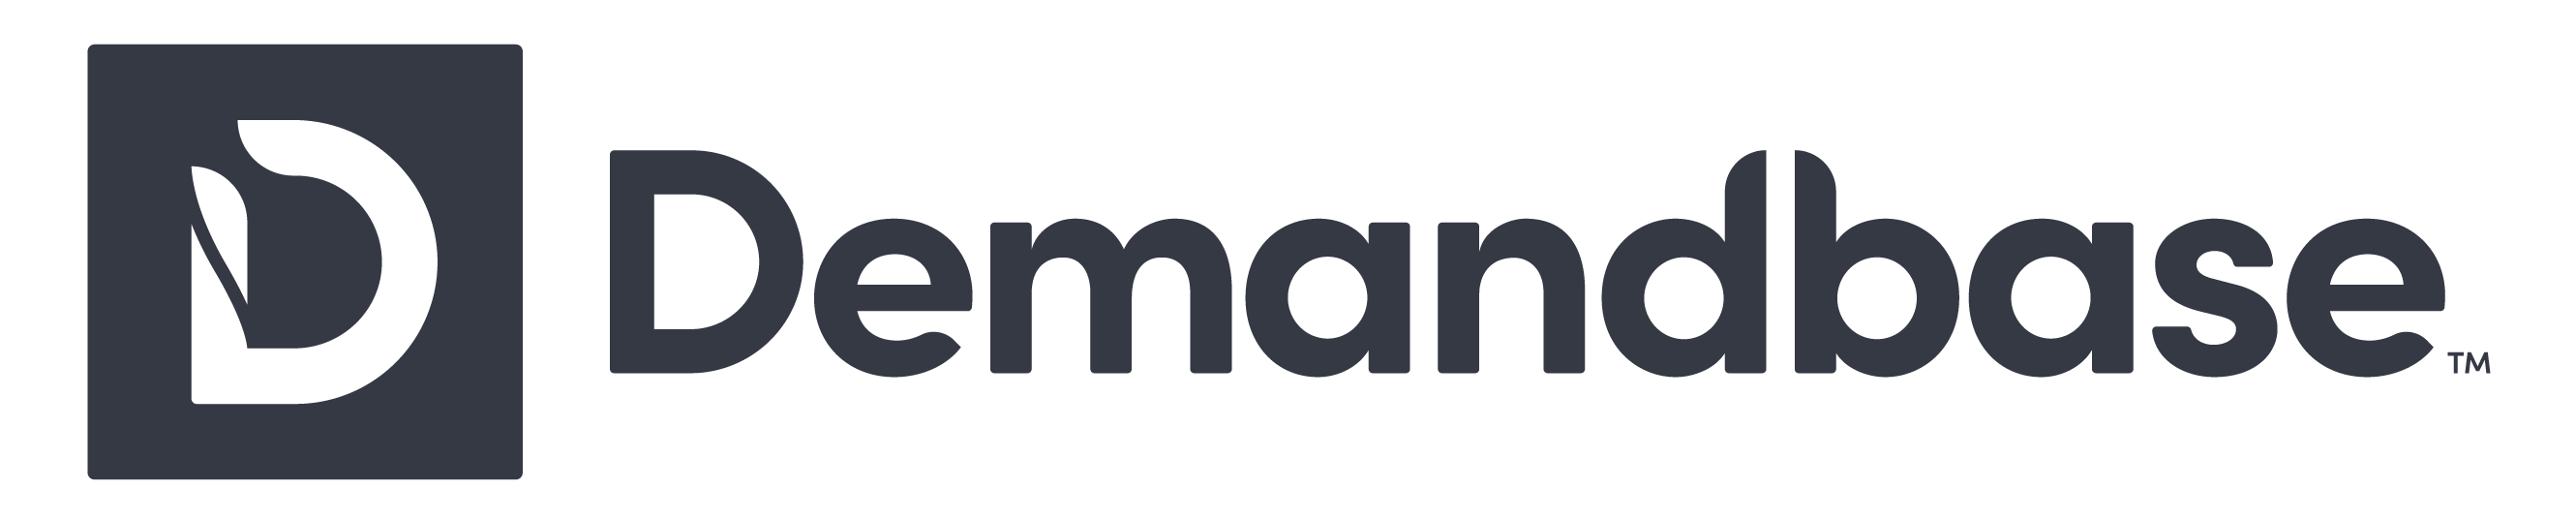 Demandbase logo black horizontal